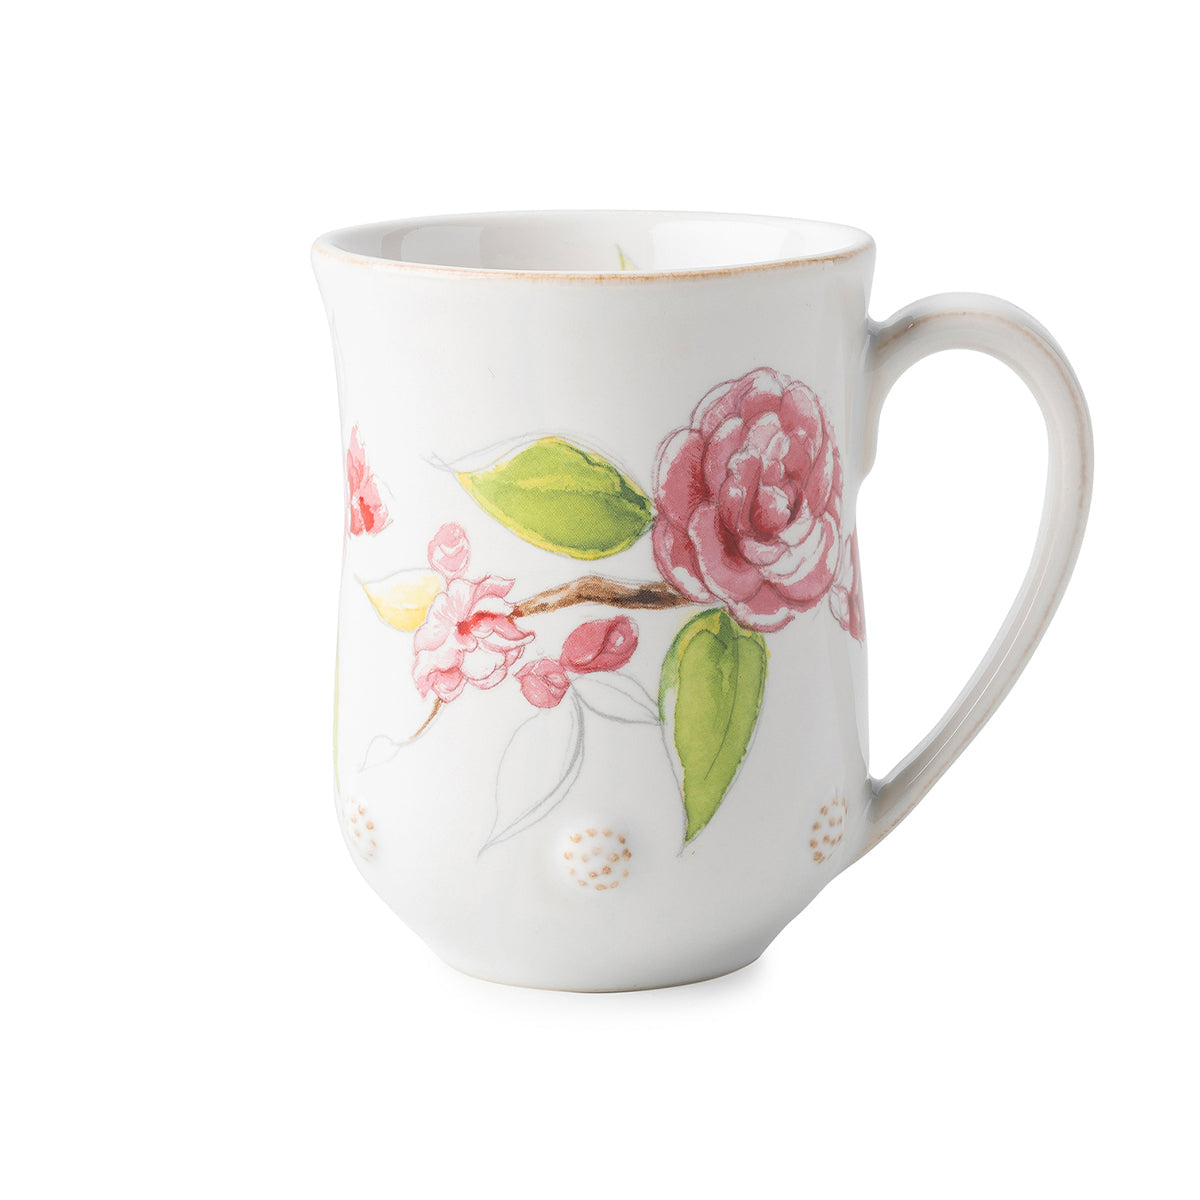 White mug with a painted camellia design.